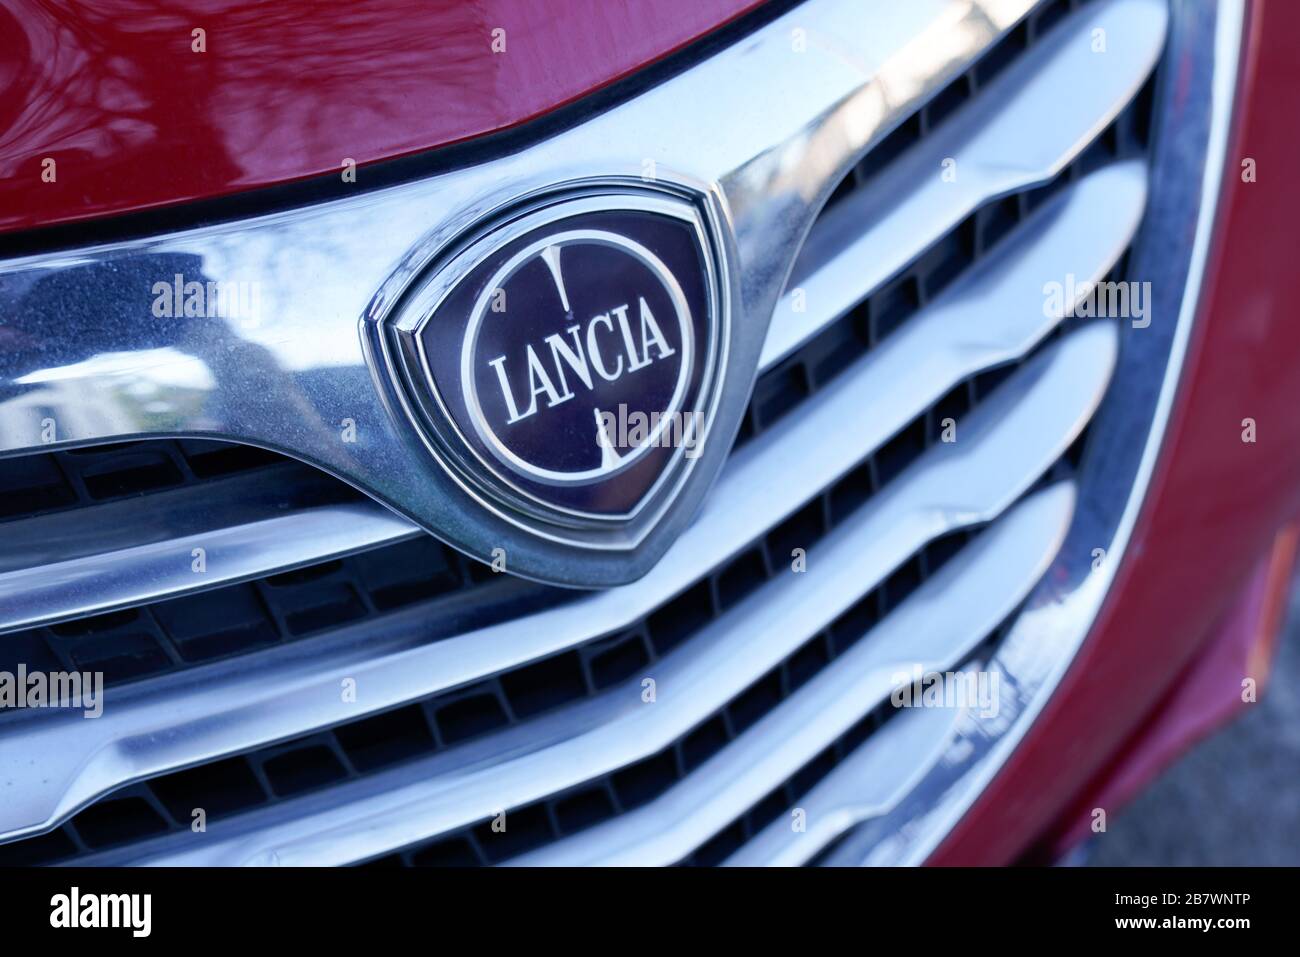 Bordeaux , Aquitaine / France - 01 24 2020 : Lancia logo sign on ypsilon car italian brand Stock Photo